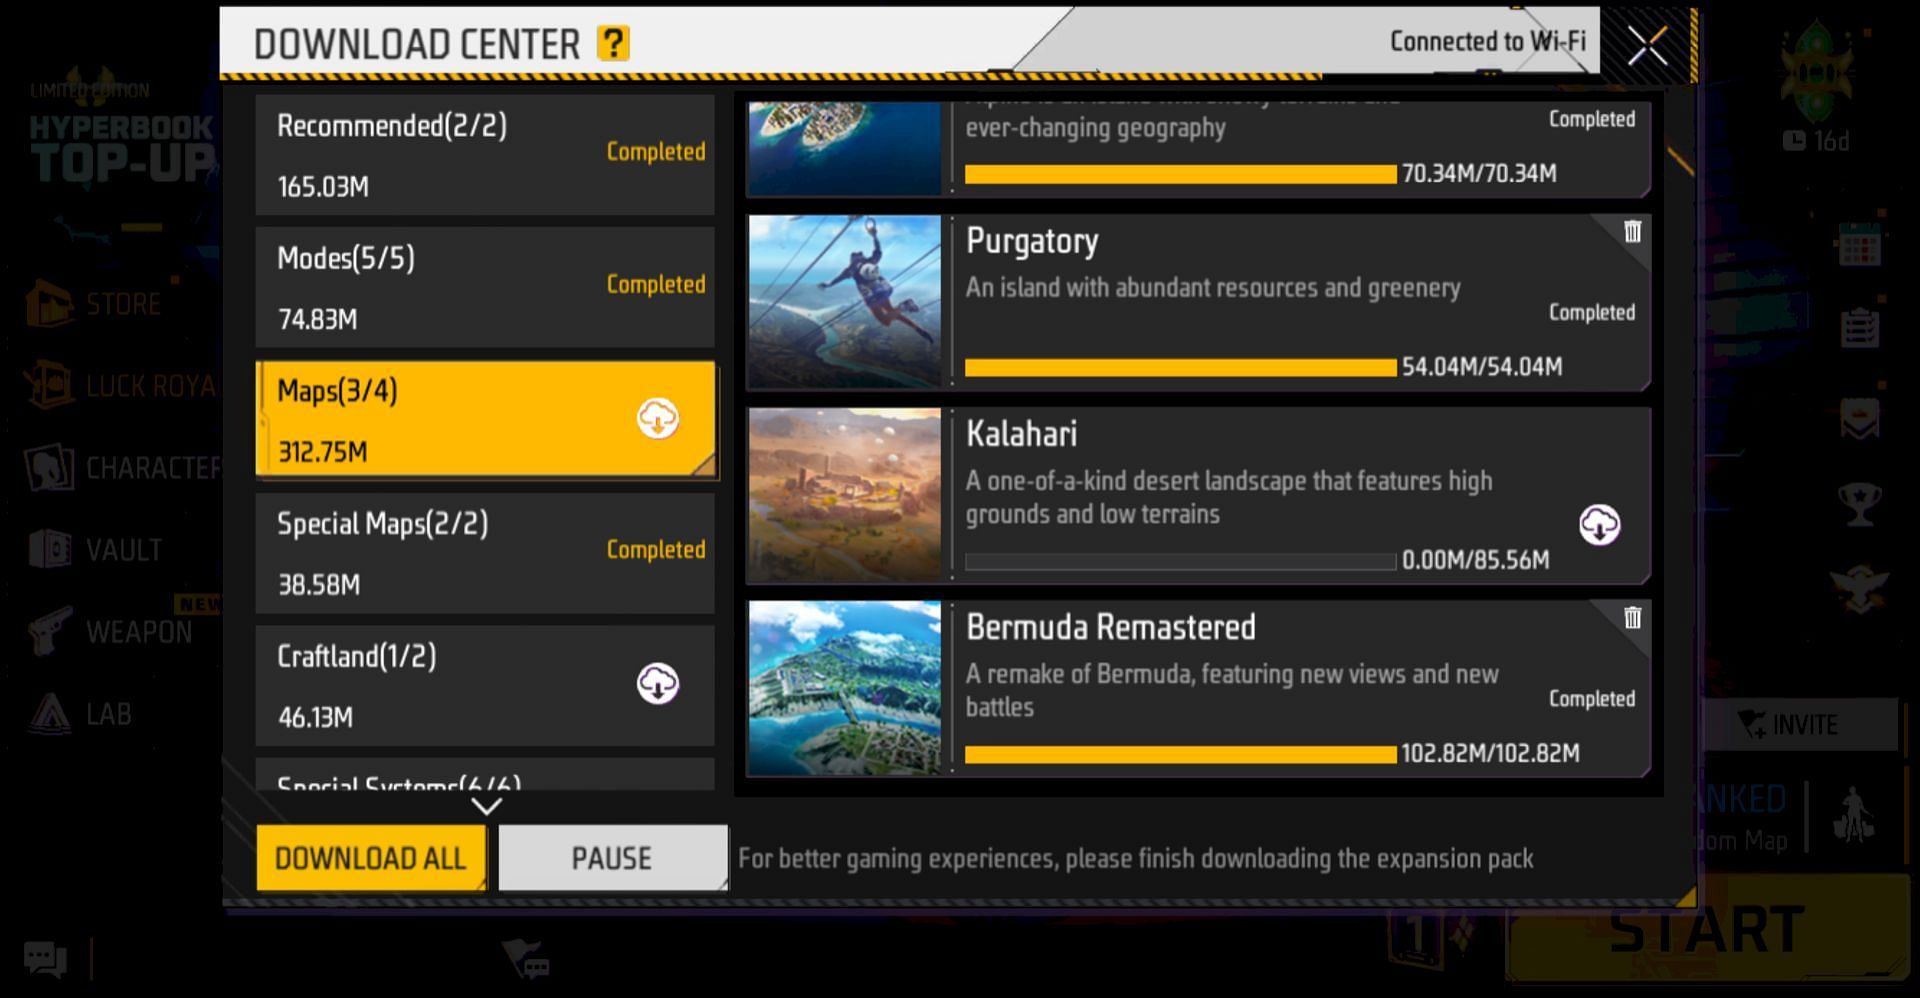 Players can download the Kalahari map from the Download Center (Image via Garena)